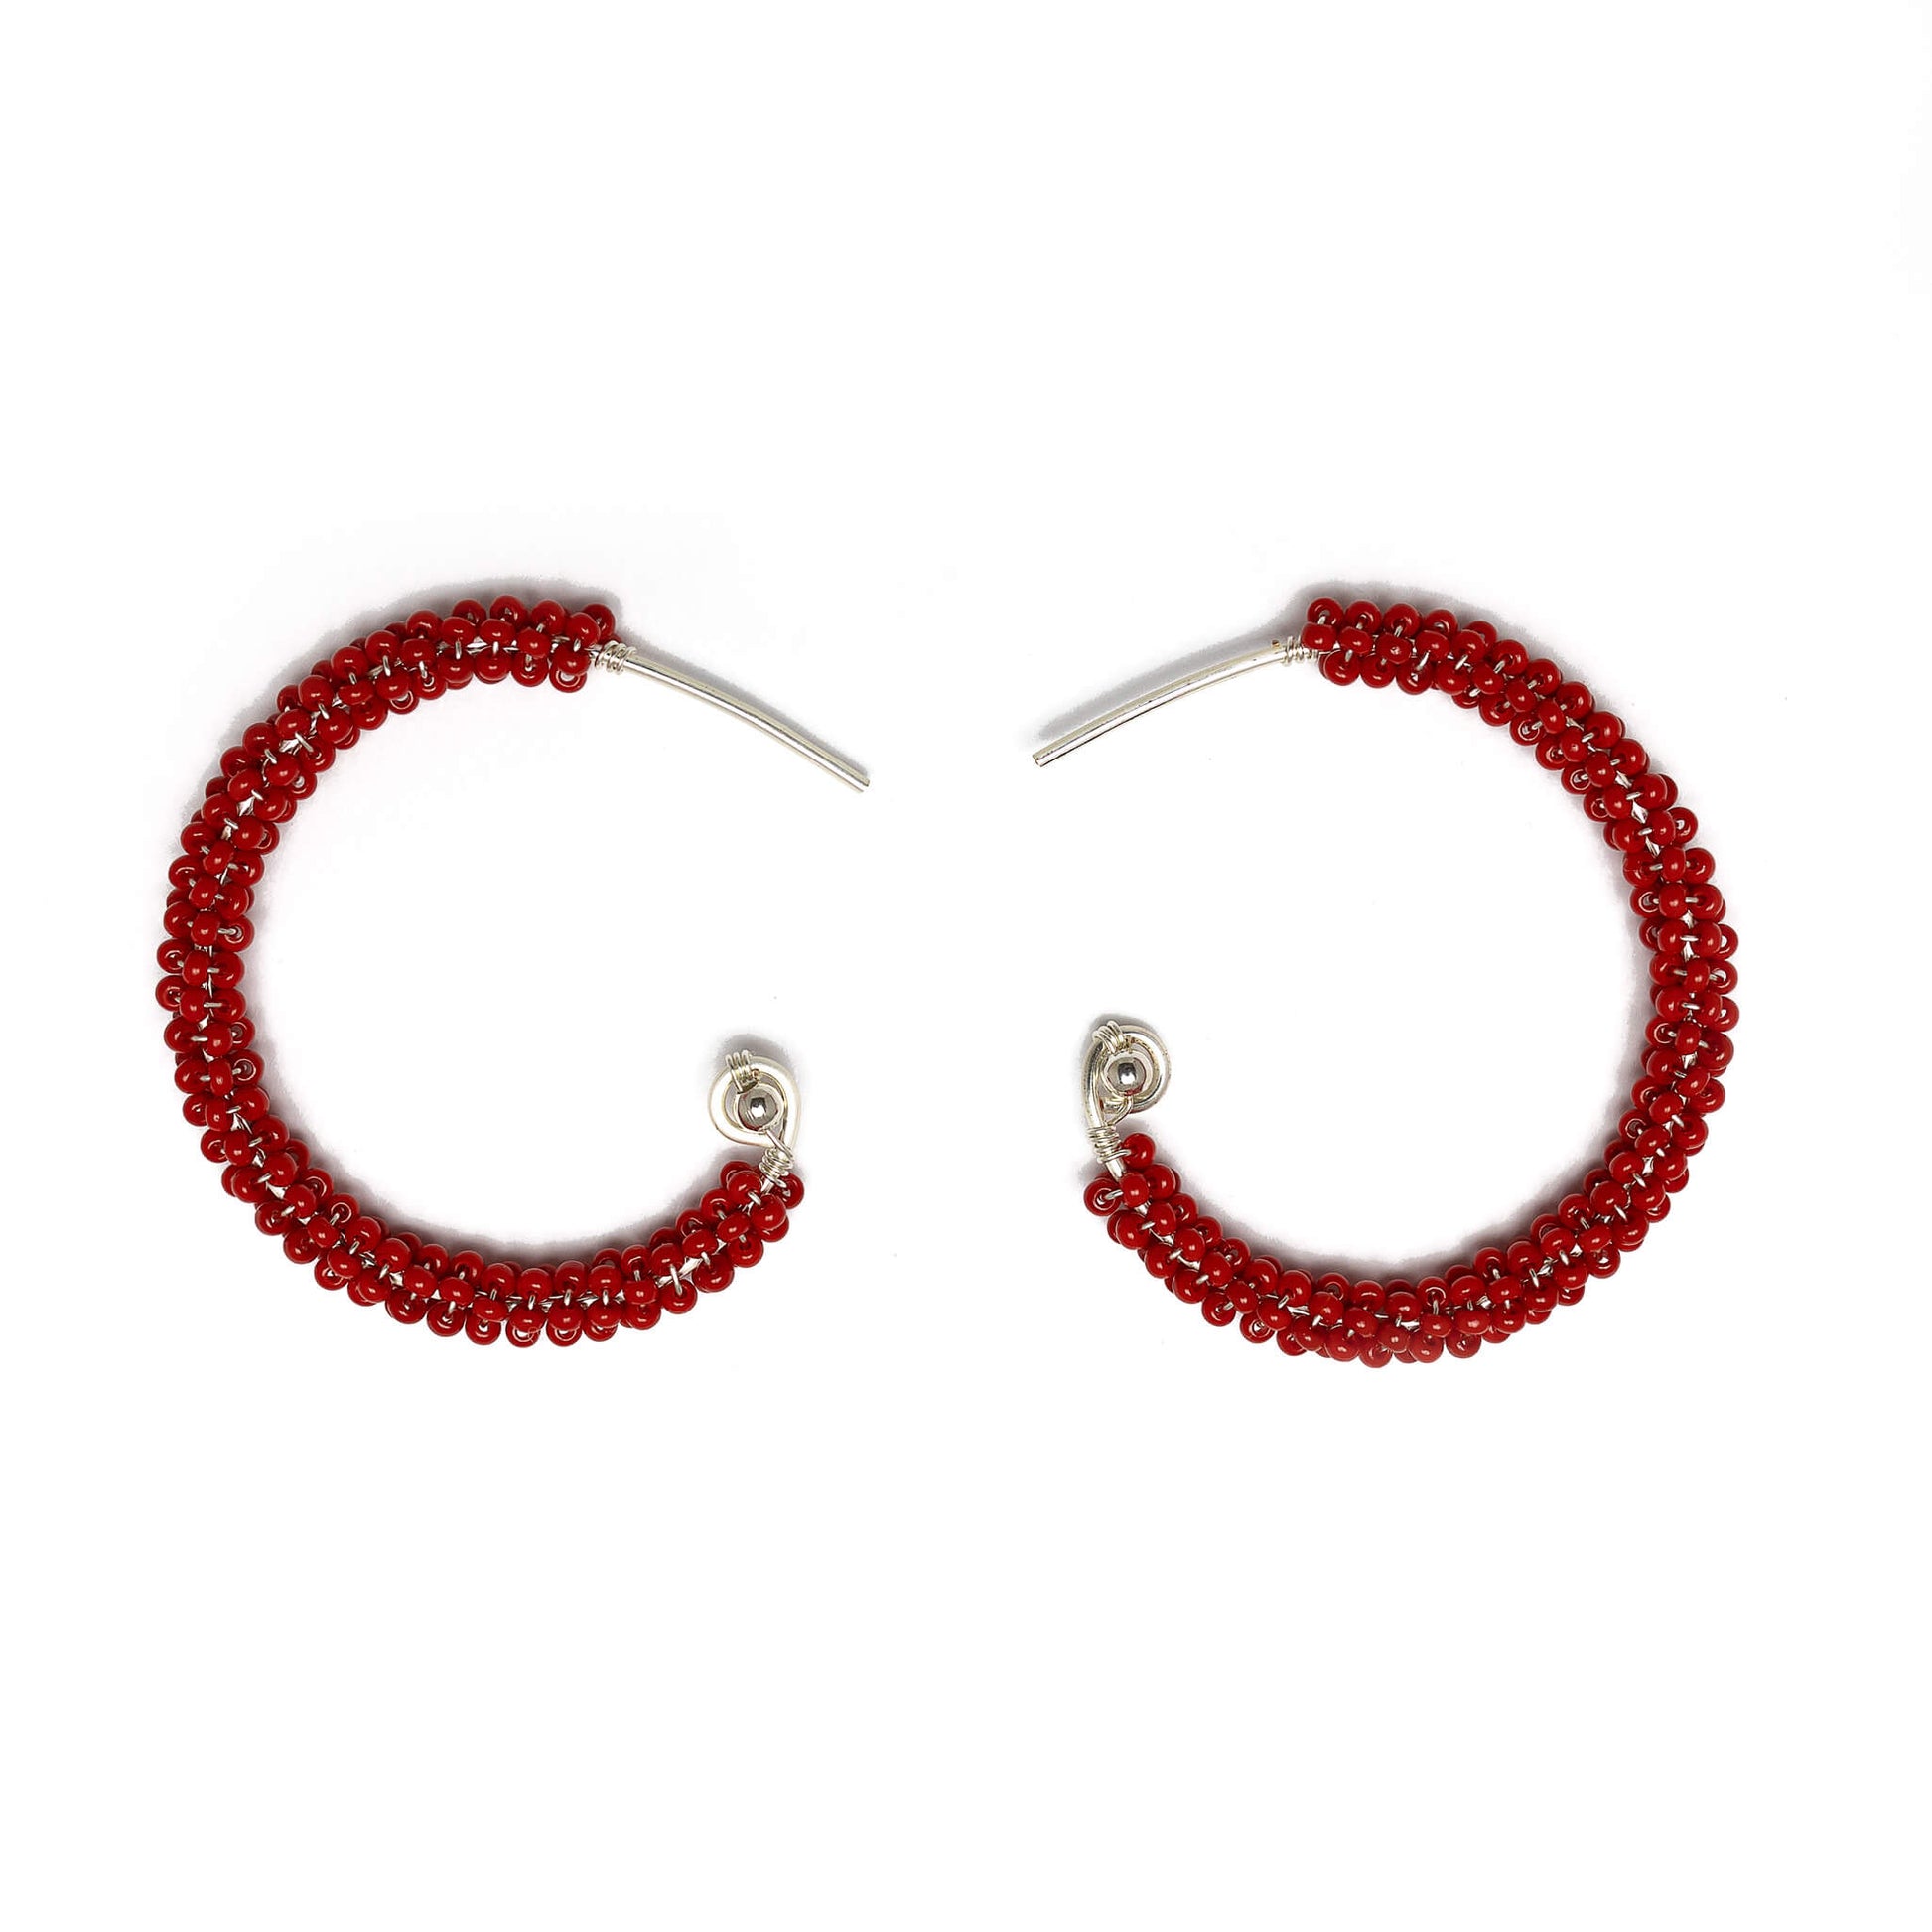 Florence Silver Hoop Earrings are 1.5 inches long, Silver and Red Earrings. Wire Wrapped Earrings. Lightweight and comfortable earrings. Handmade for women. Open hoop earrings